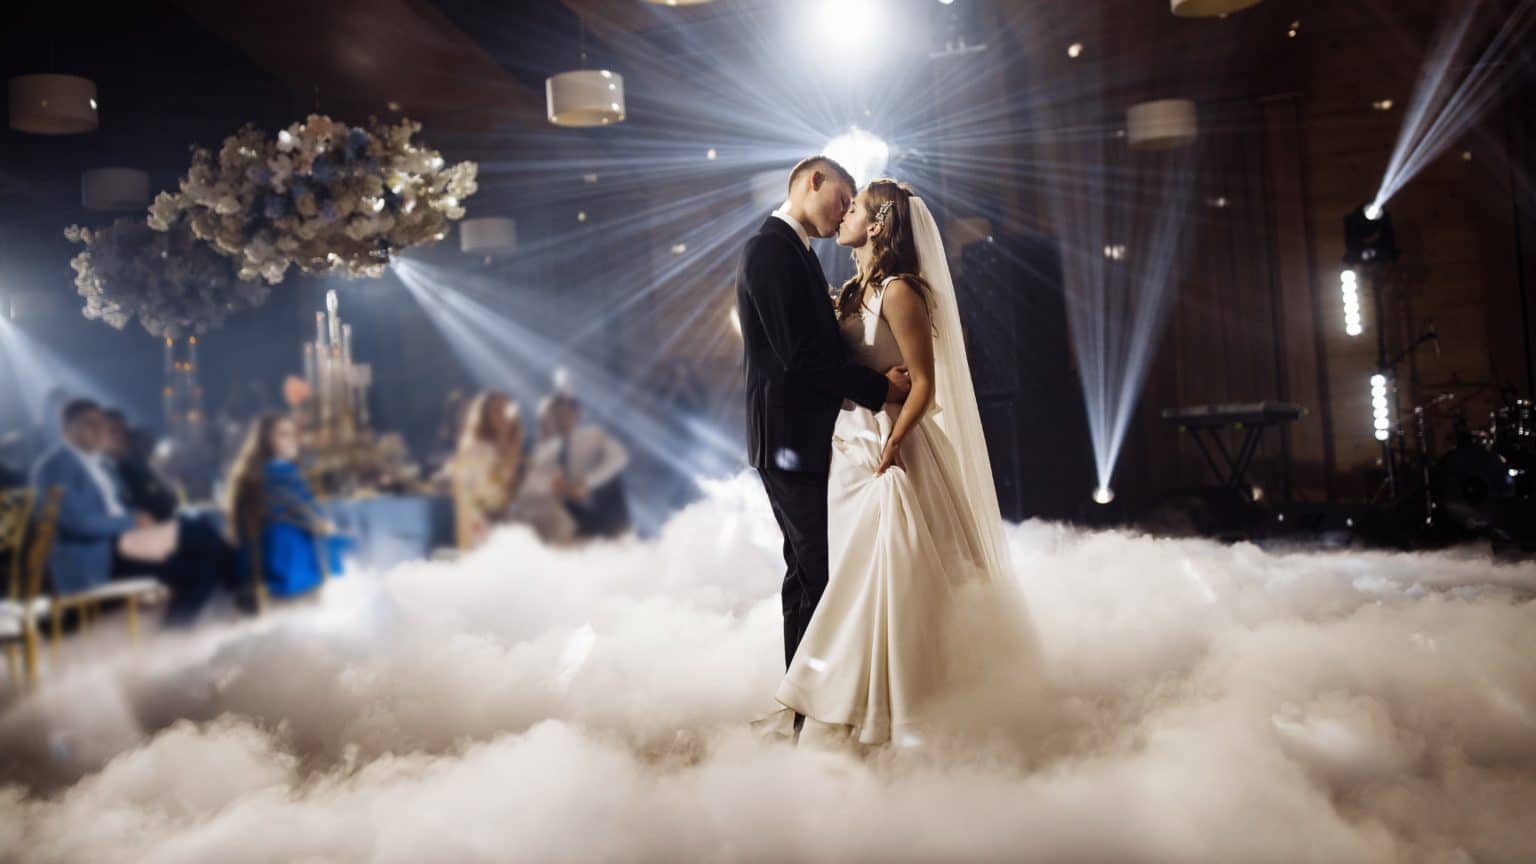 Najljepše lagane pjesme za prvi svadbeni ples: Top 20 izbora